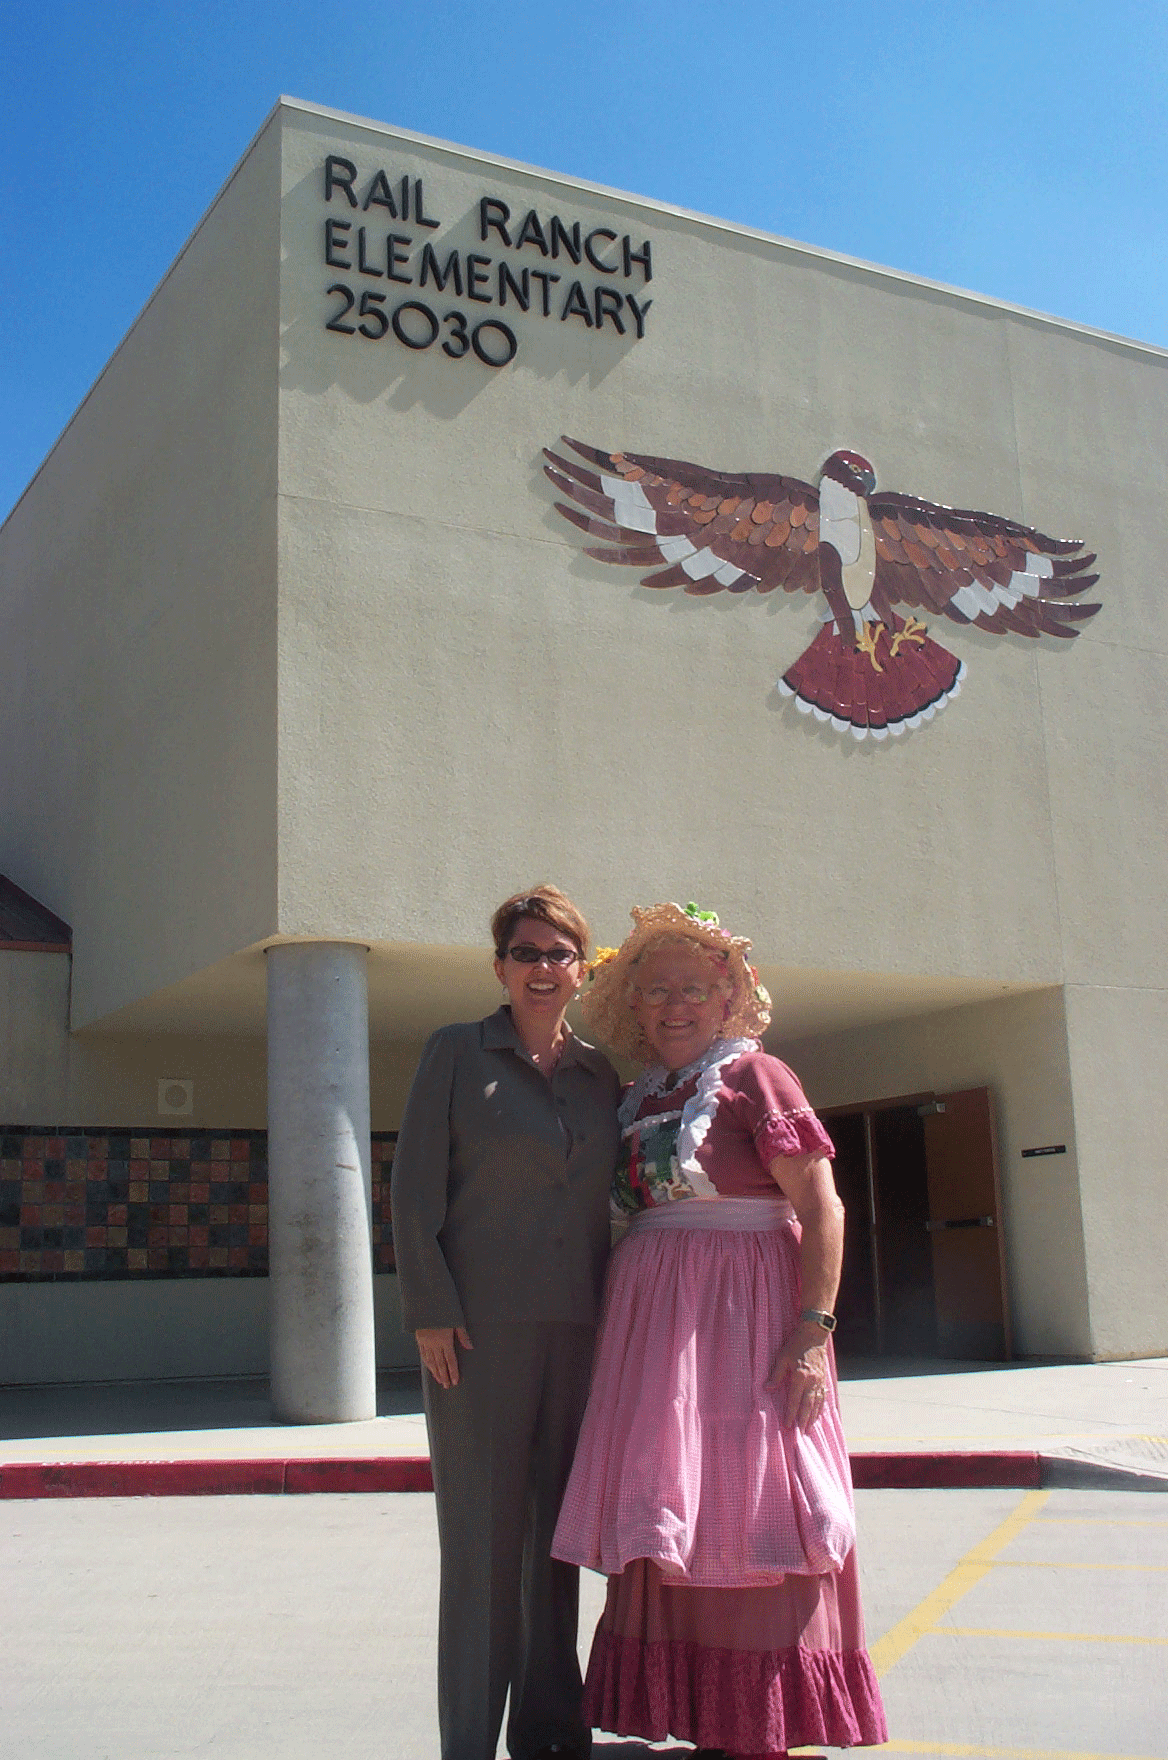 Grandma at Rail Ranch Elementary